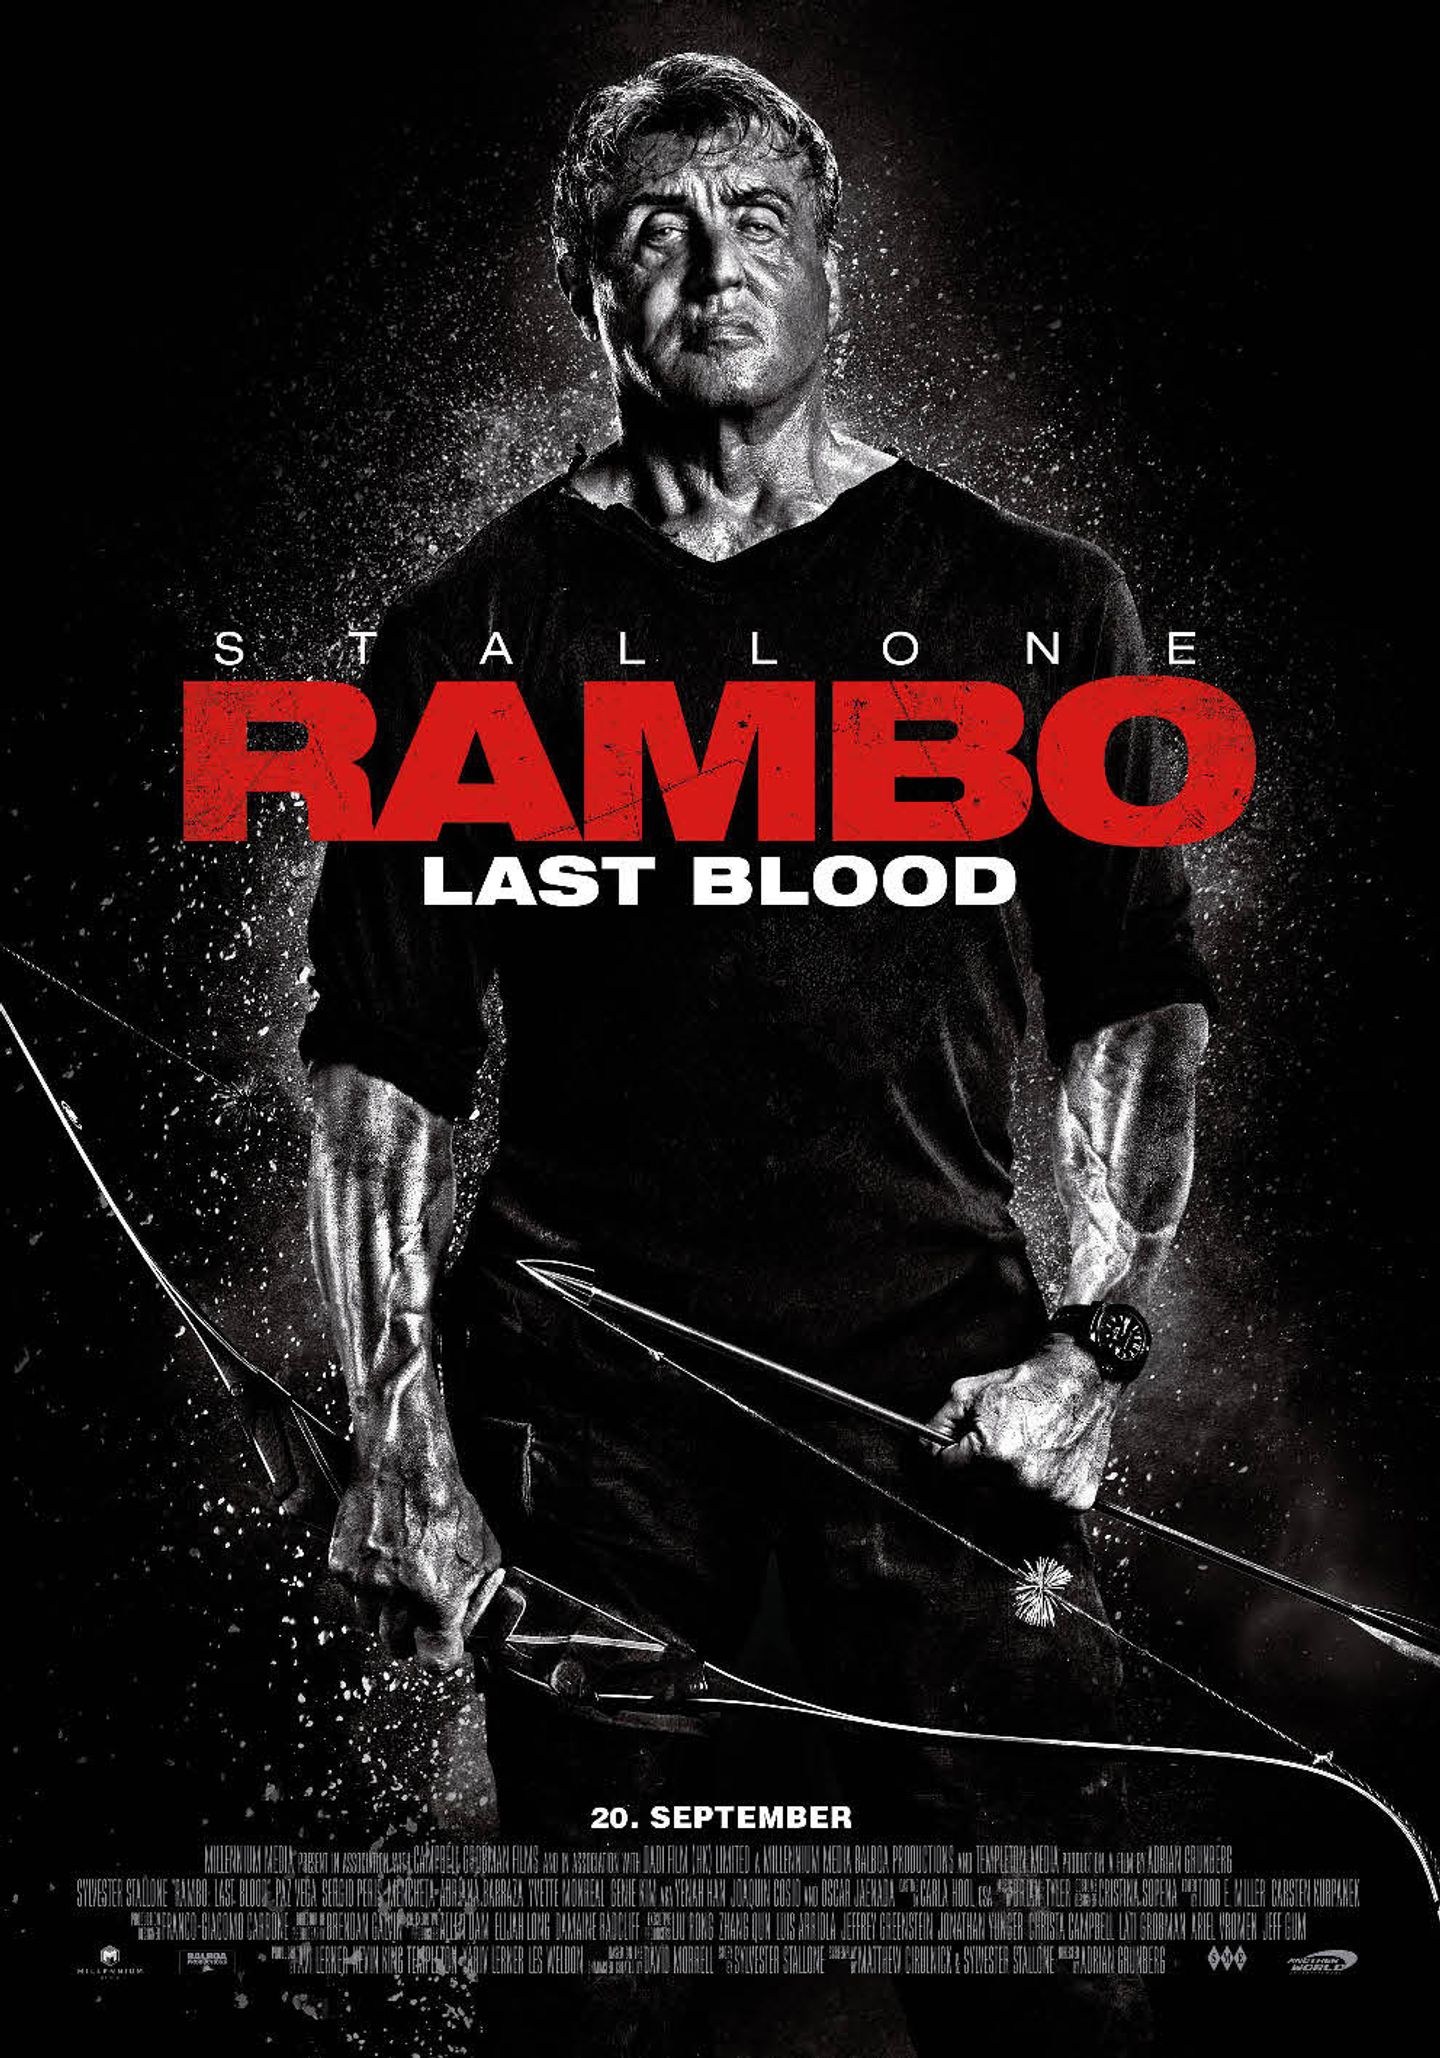 Plakat for 'Rambo: Last Blood'